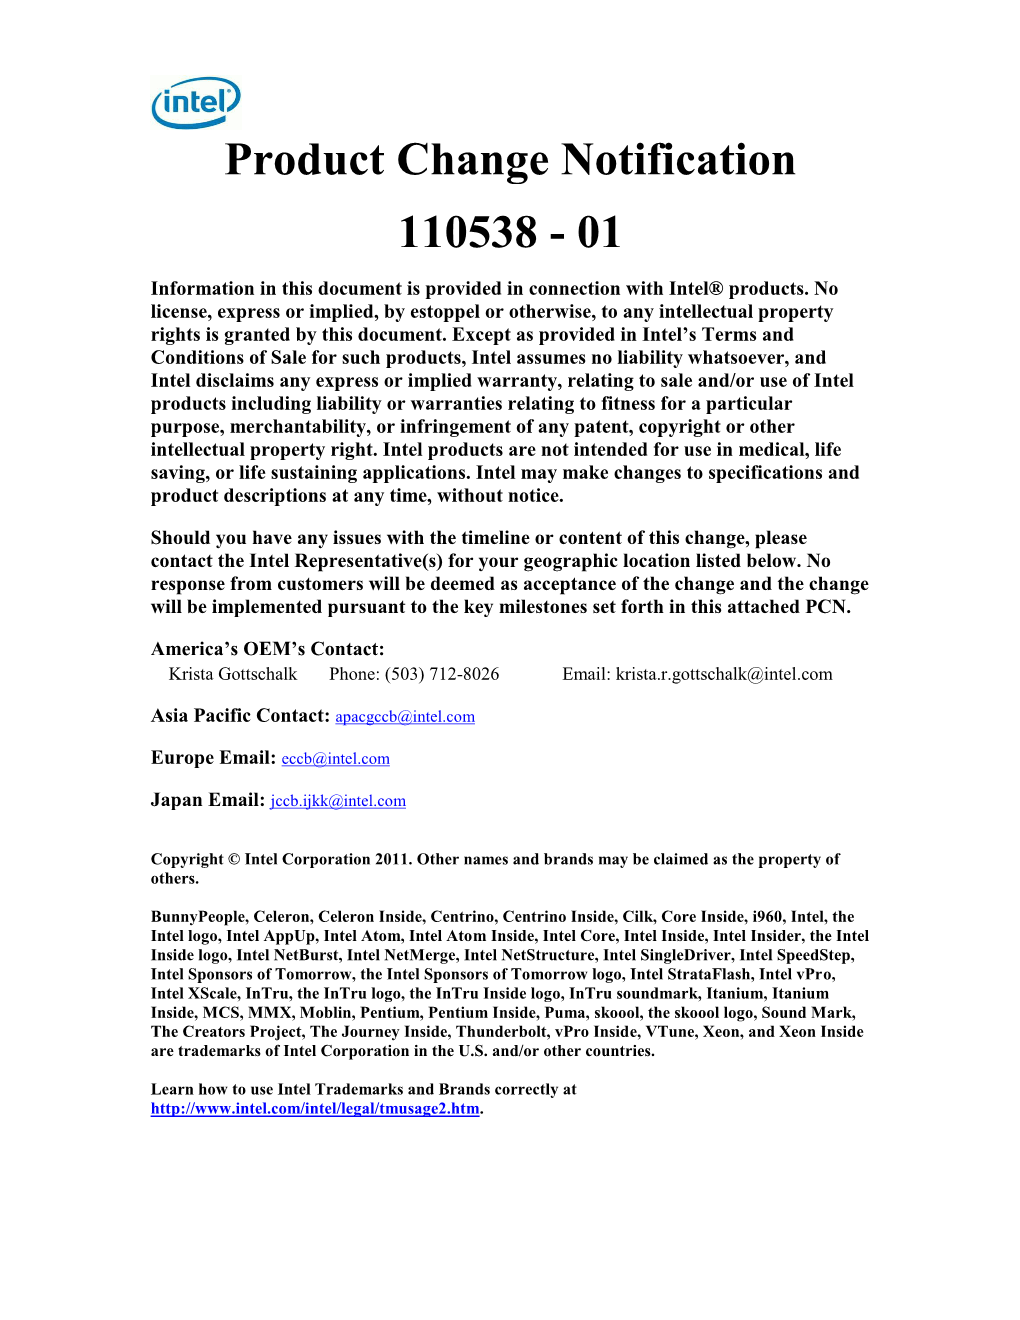 Product Change Notification 110538